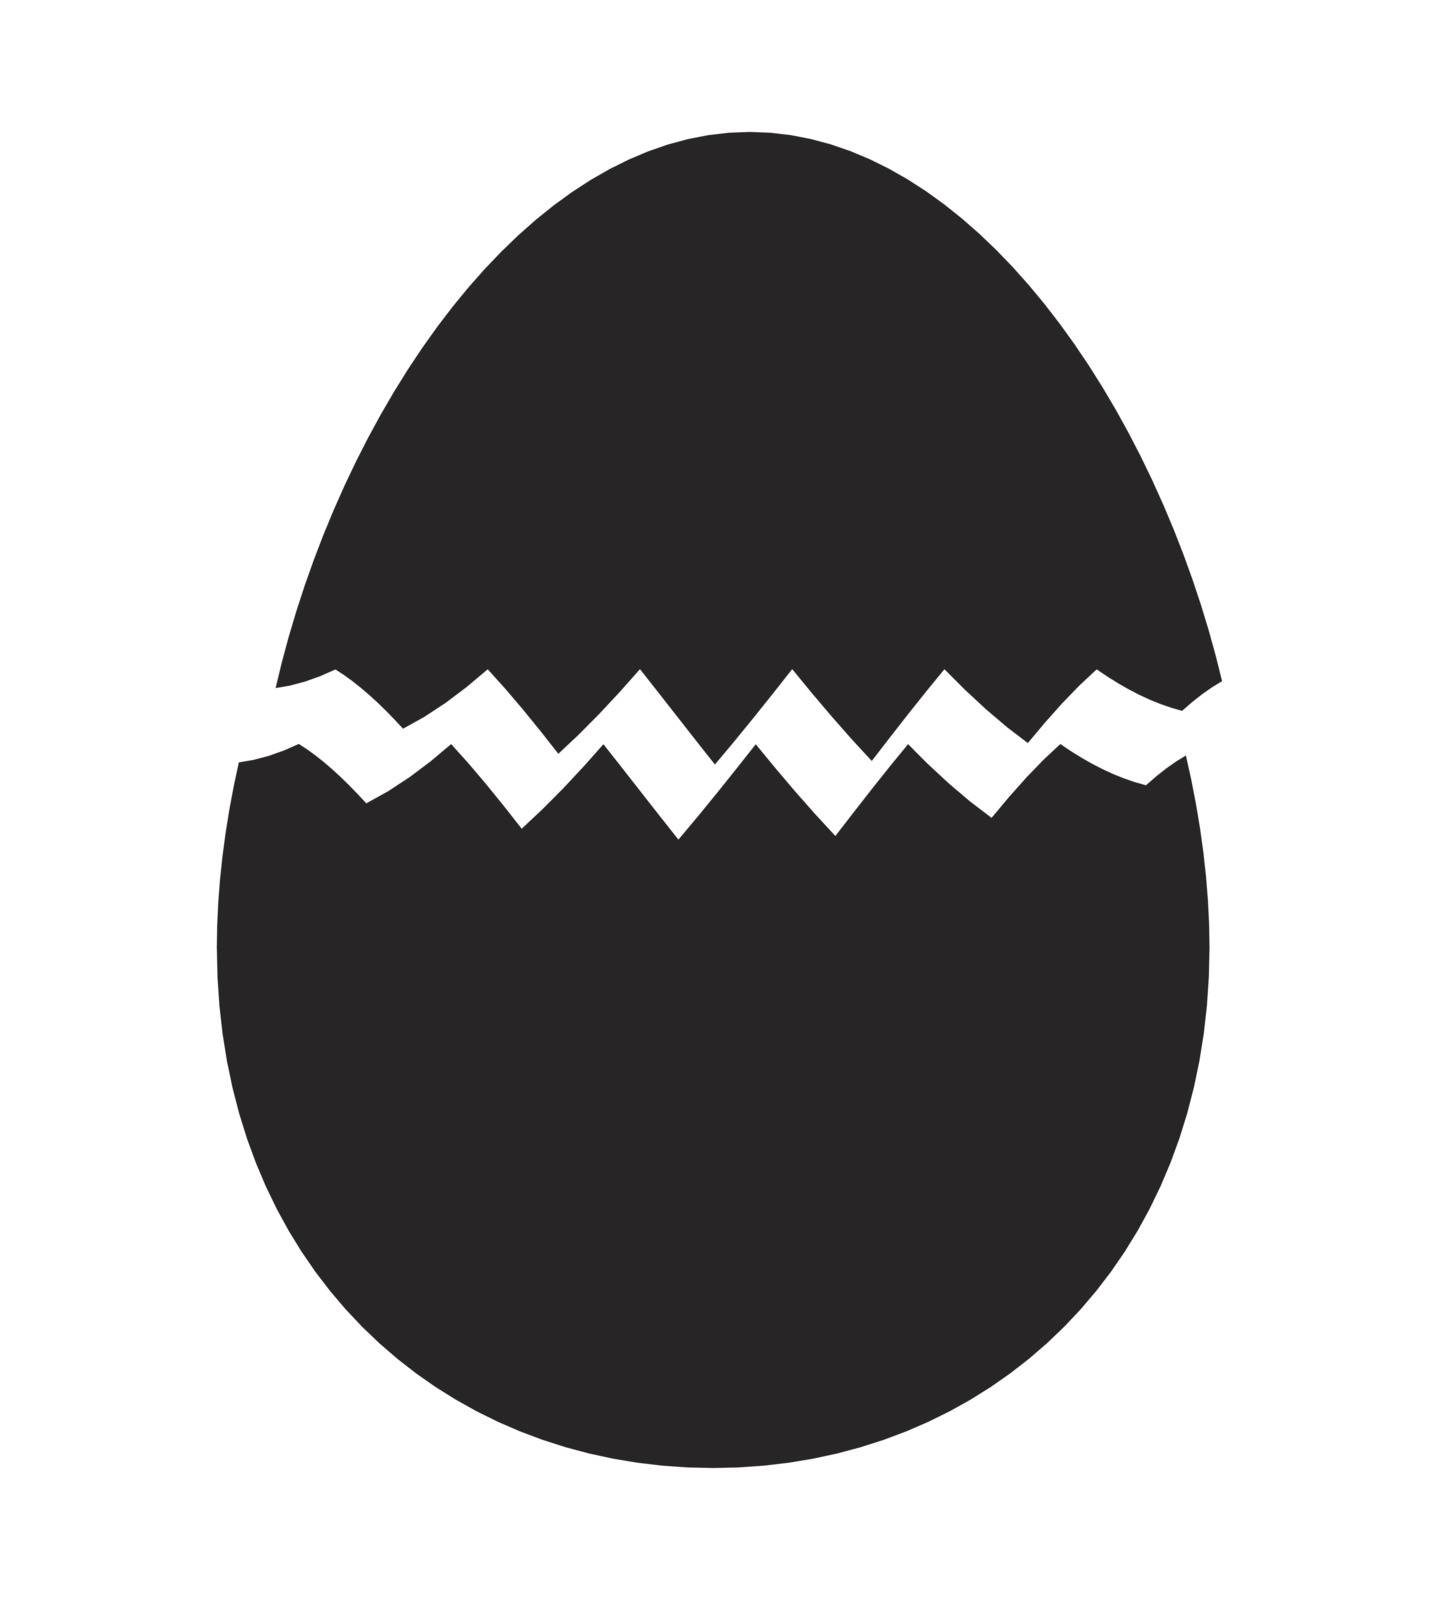 broken egg silhouette vector symbol icon design.  by wektorygrafika